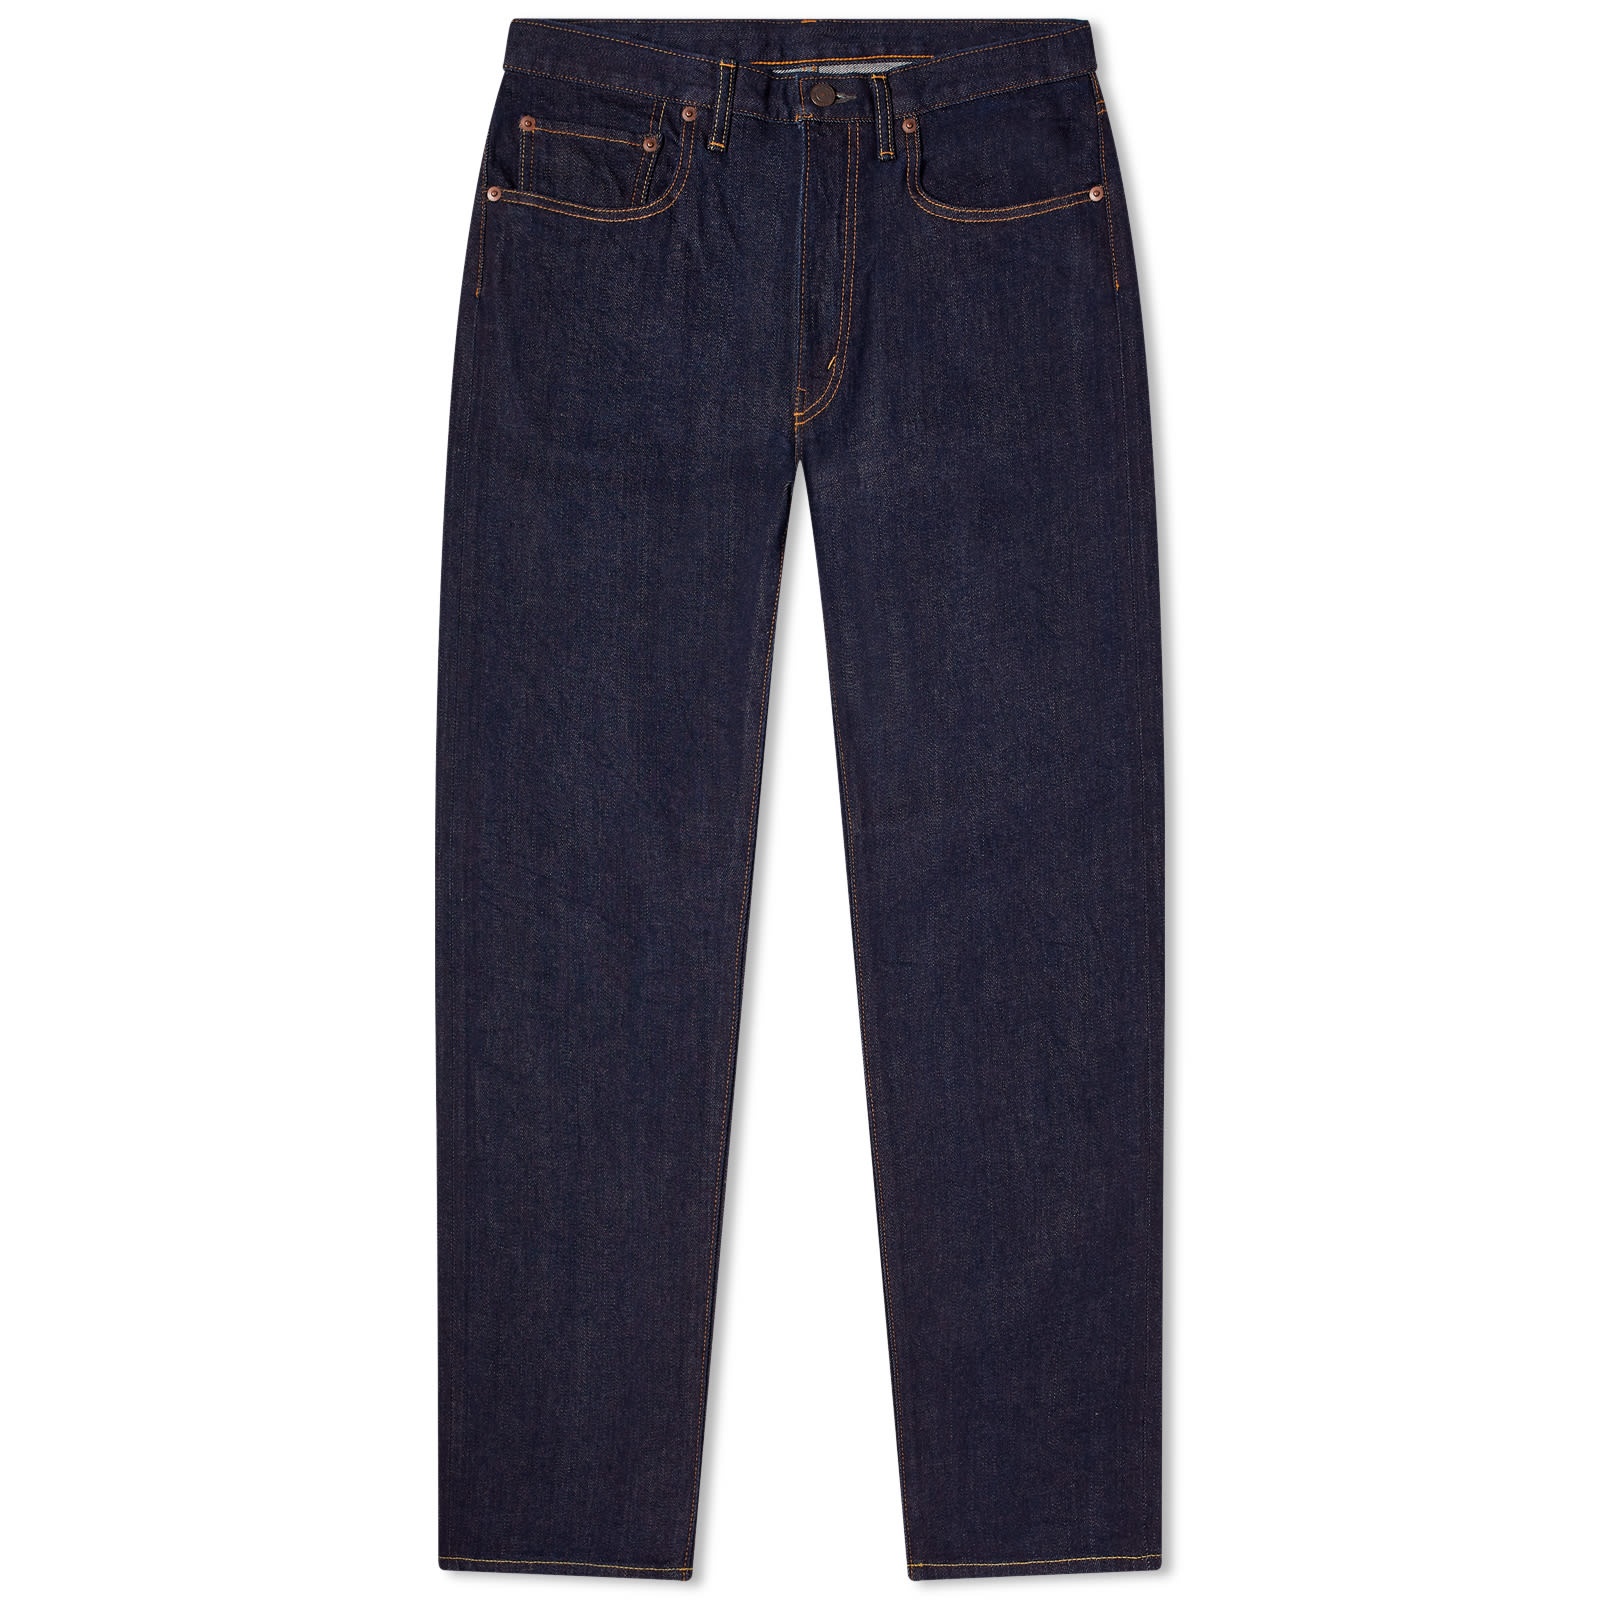 Beams Plus 5 Pocket Denim Jeans - 1